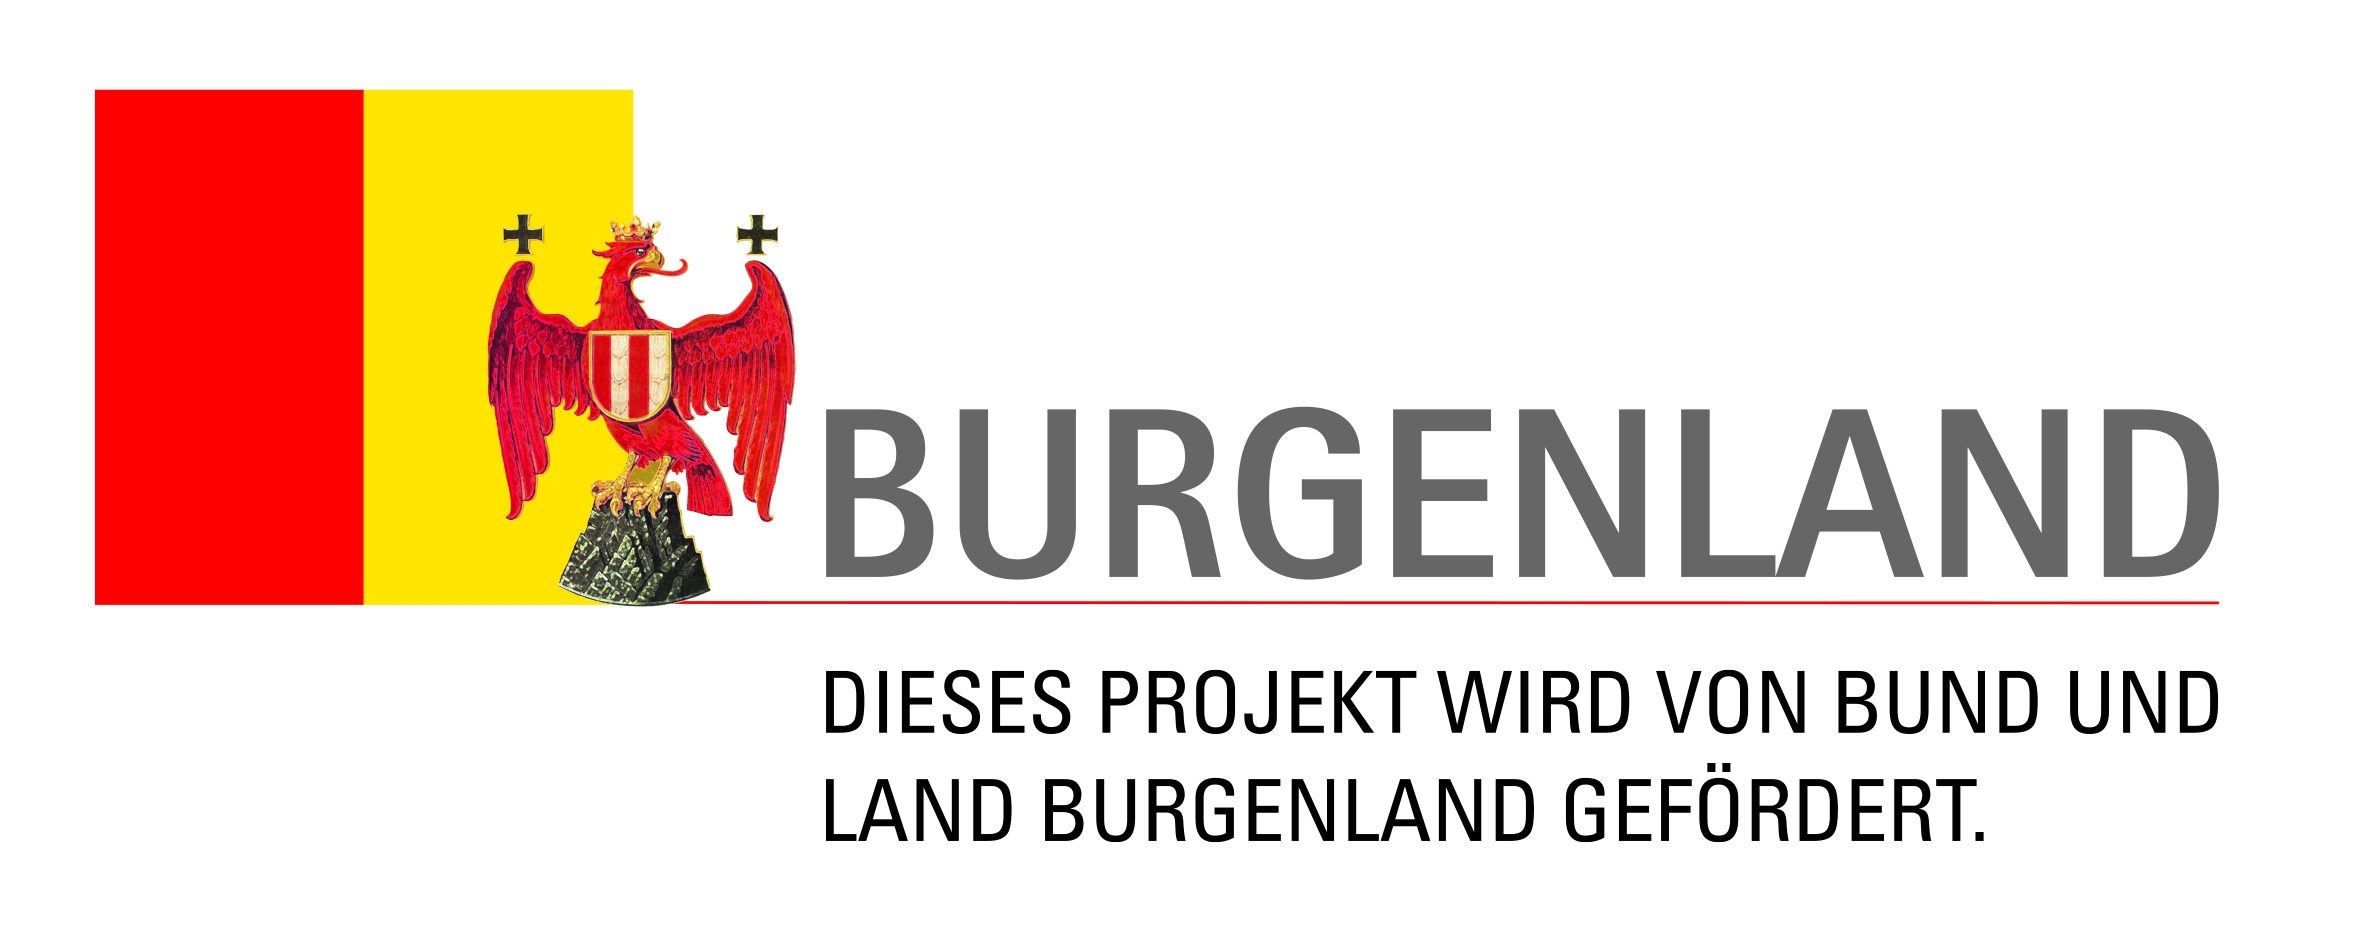 Land Burgenland